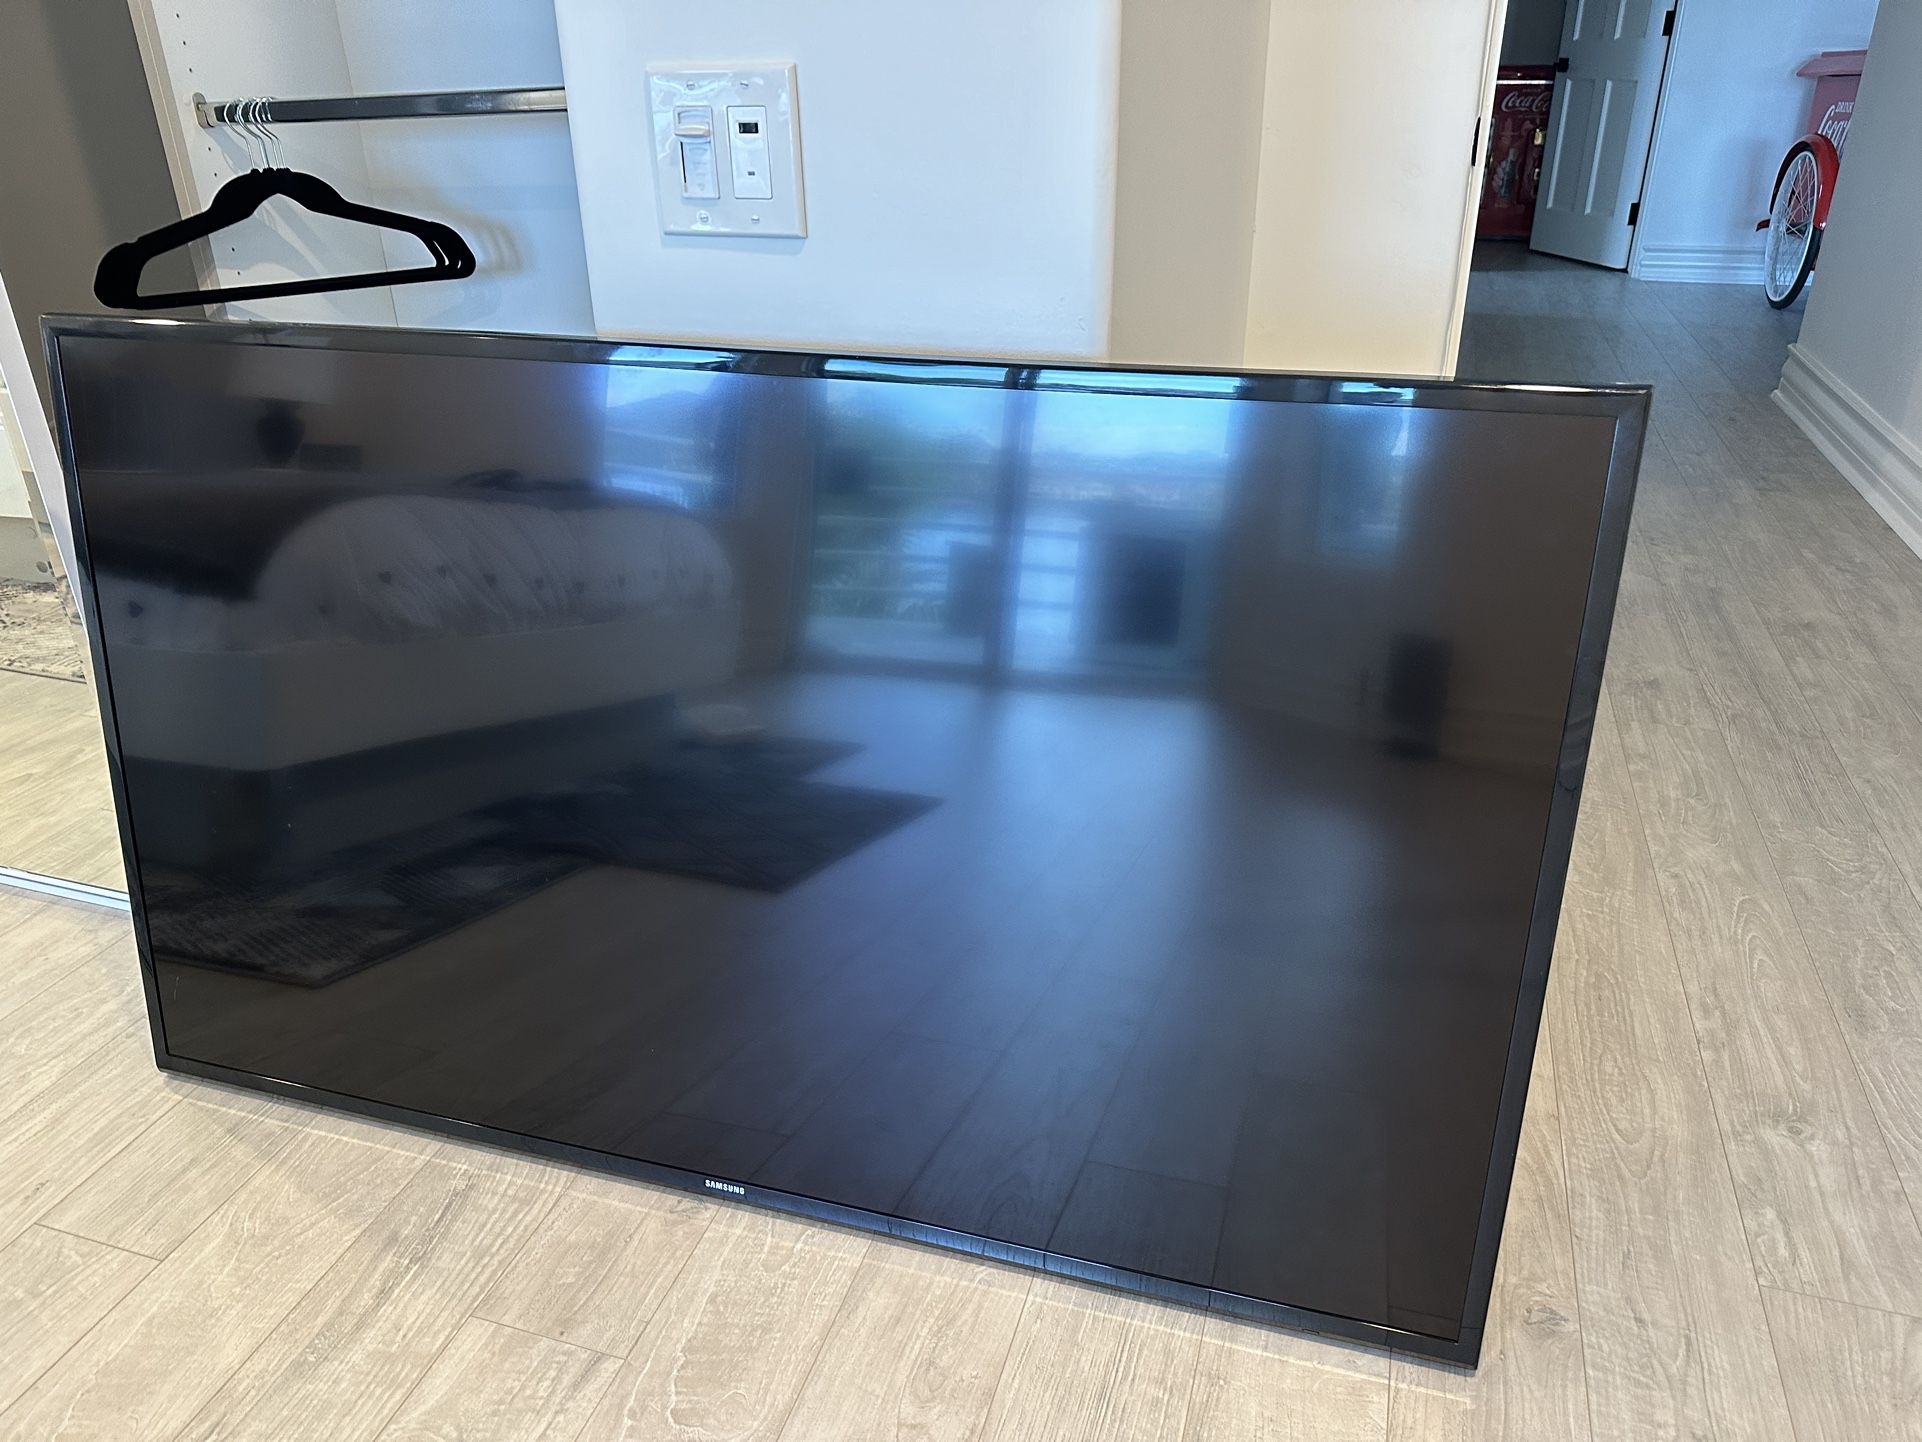 60 inch Samsung flatscreen TV